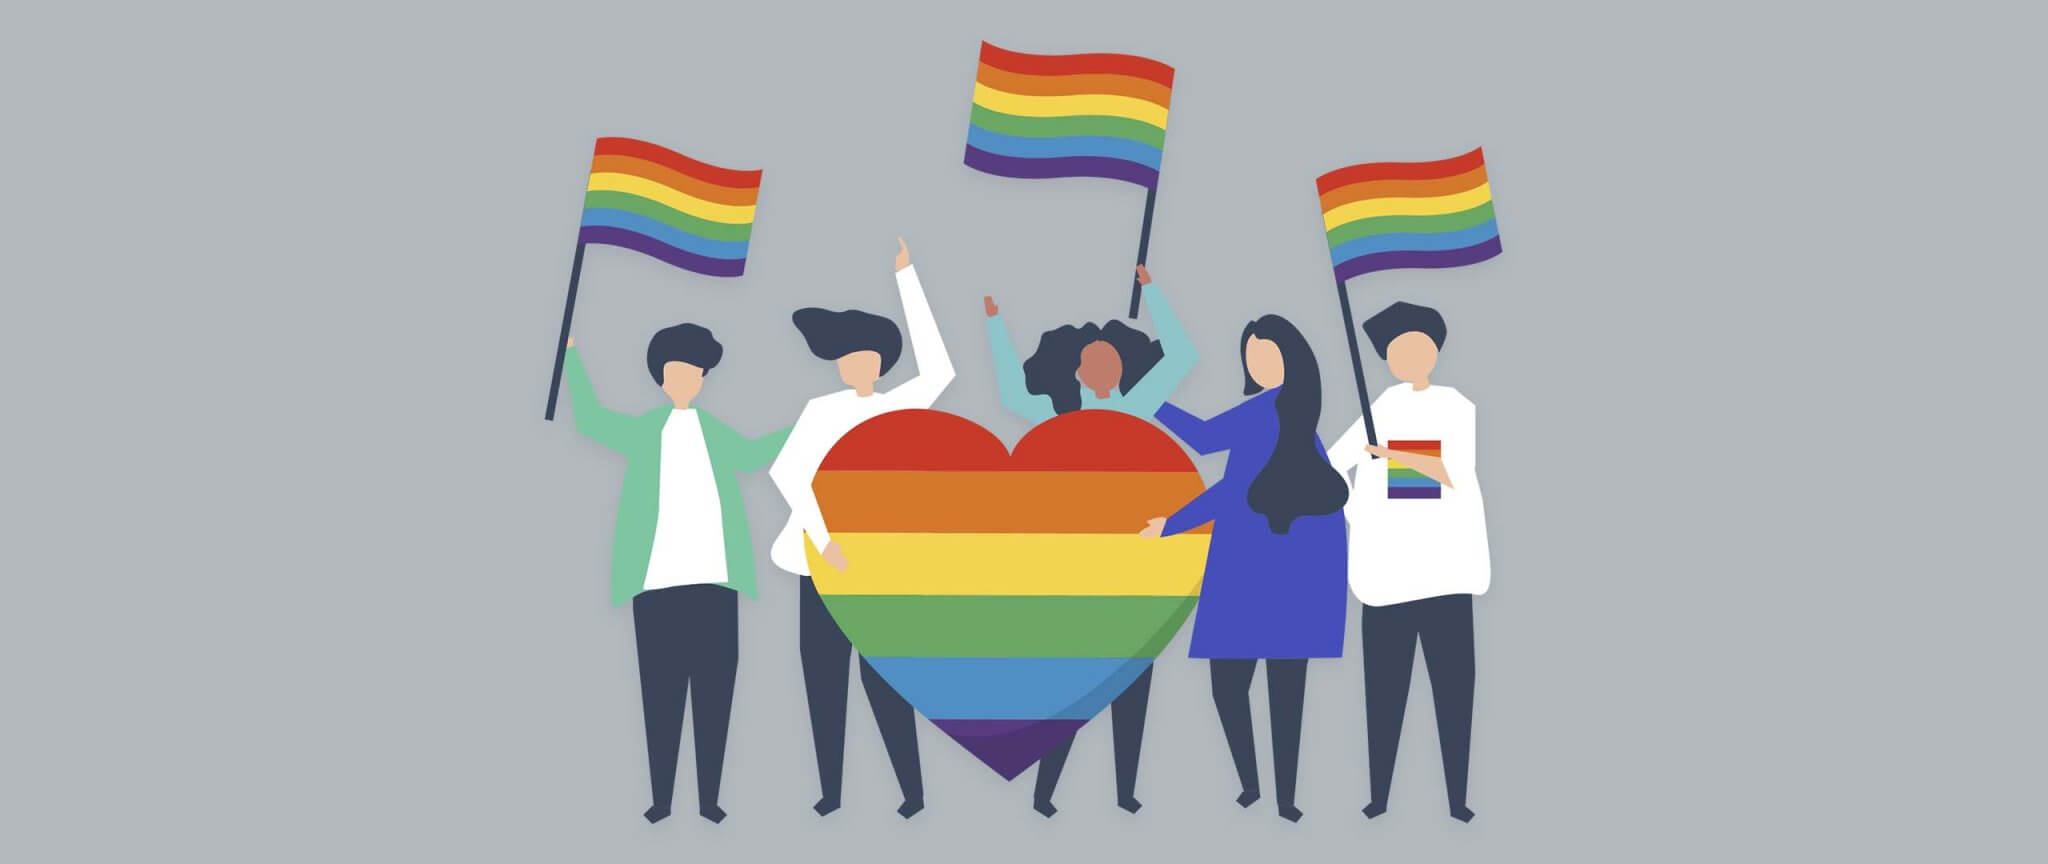 4 Ideas For Celebrating Pride Month 2021 | Vizons Design